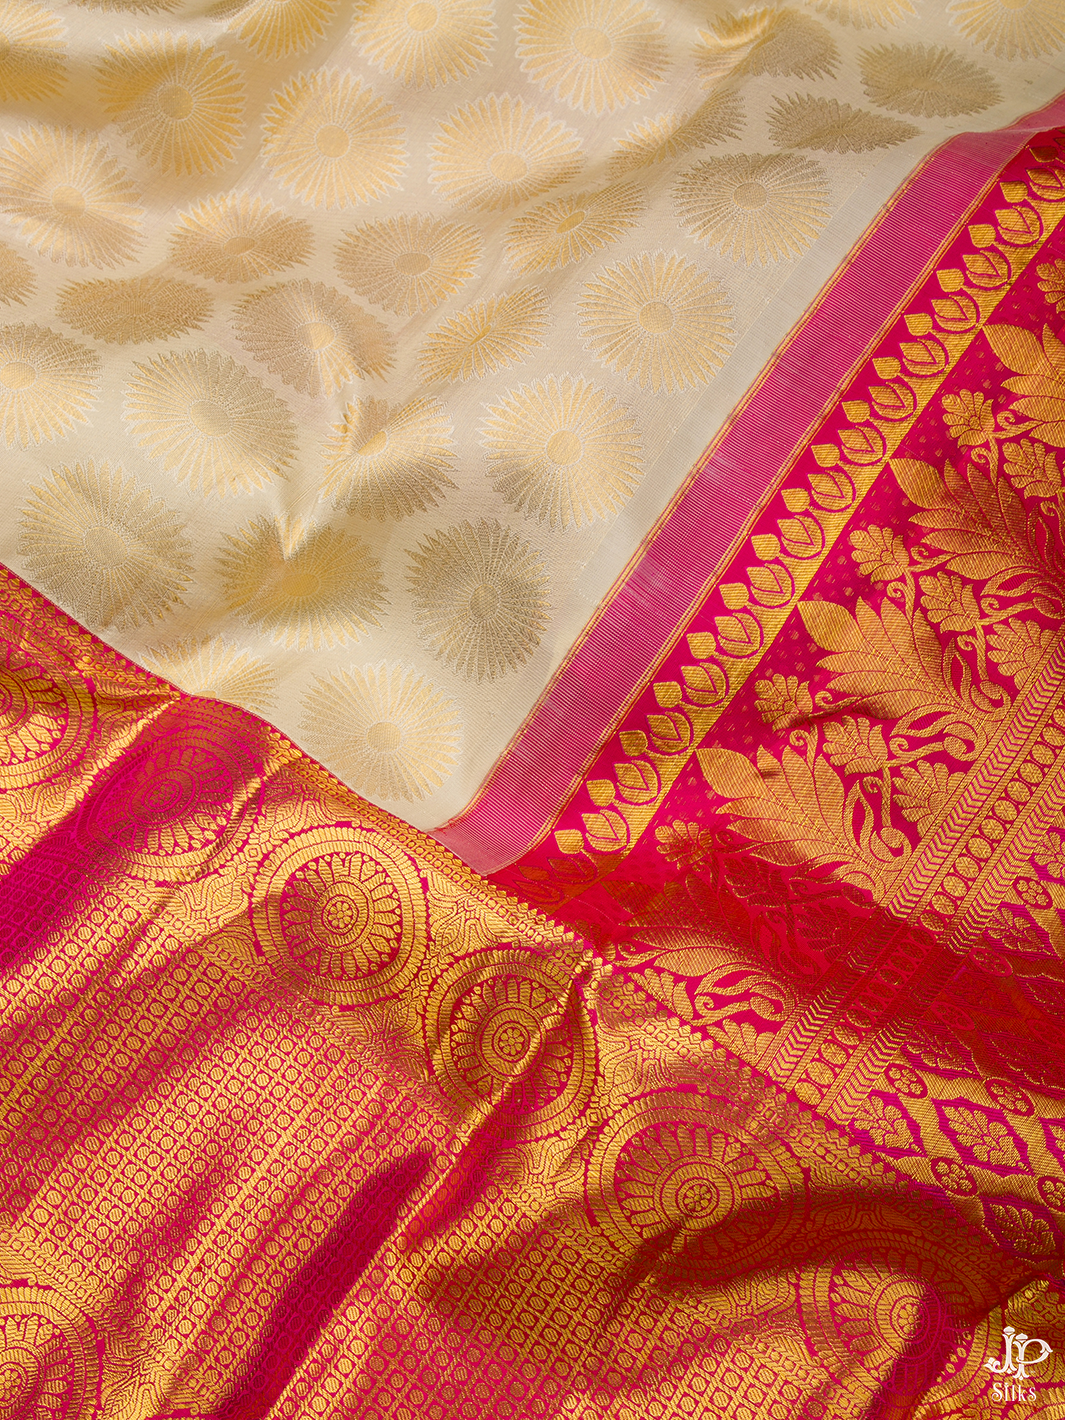 Cream and Reddish Pink Kanchipuram Silk Saree - A7235 - View 2